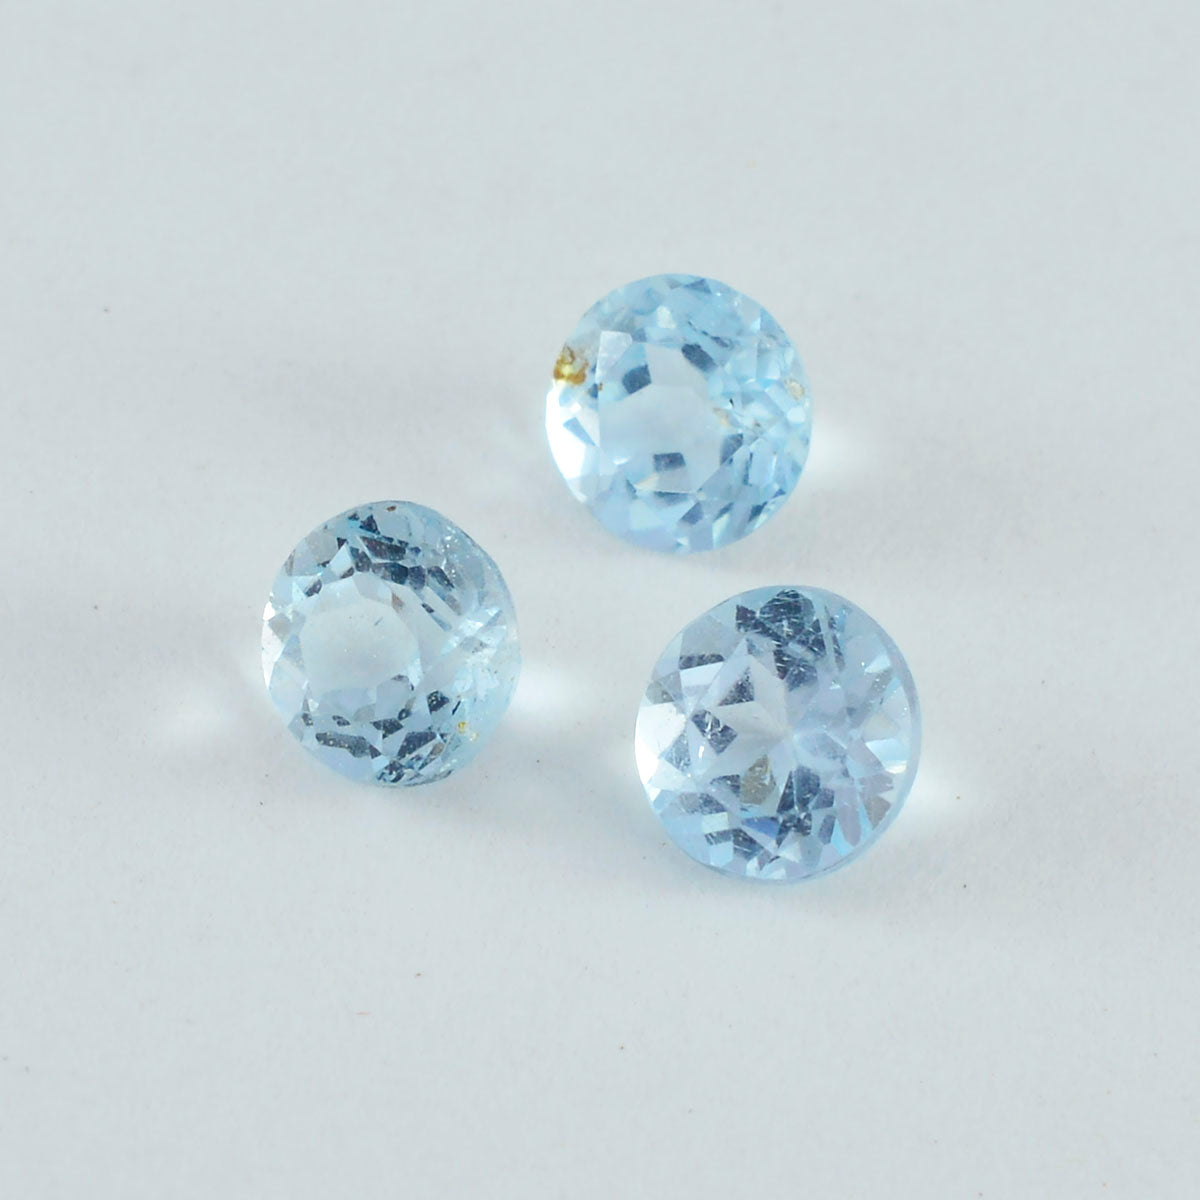 Riyogems 1PC Natural Blue Topaz Faceted 7x7 mm Round Shape beauty Quality Gem